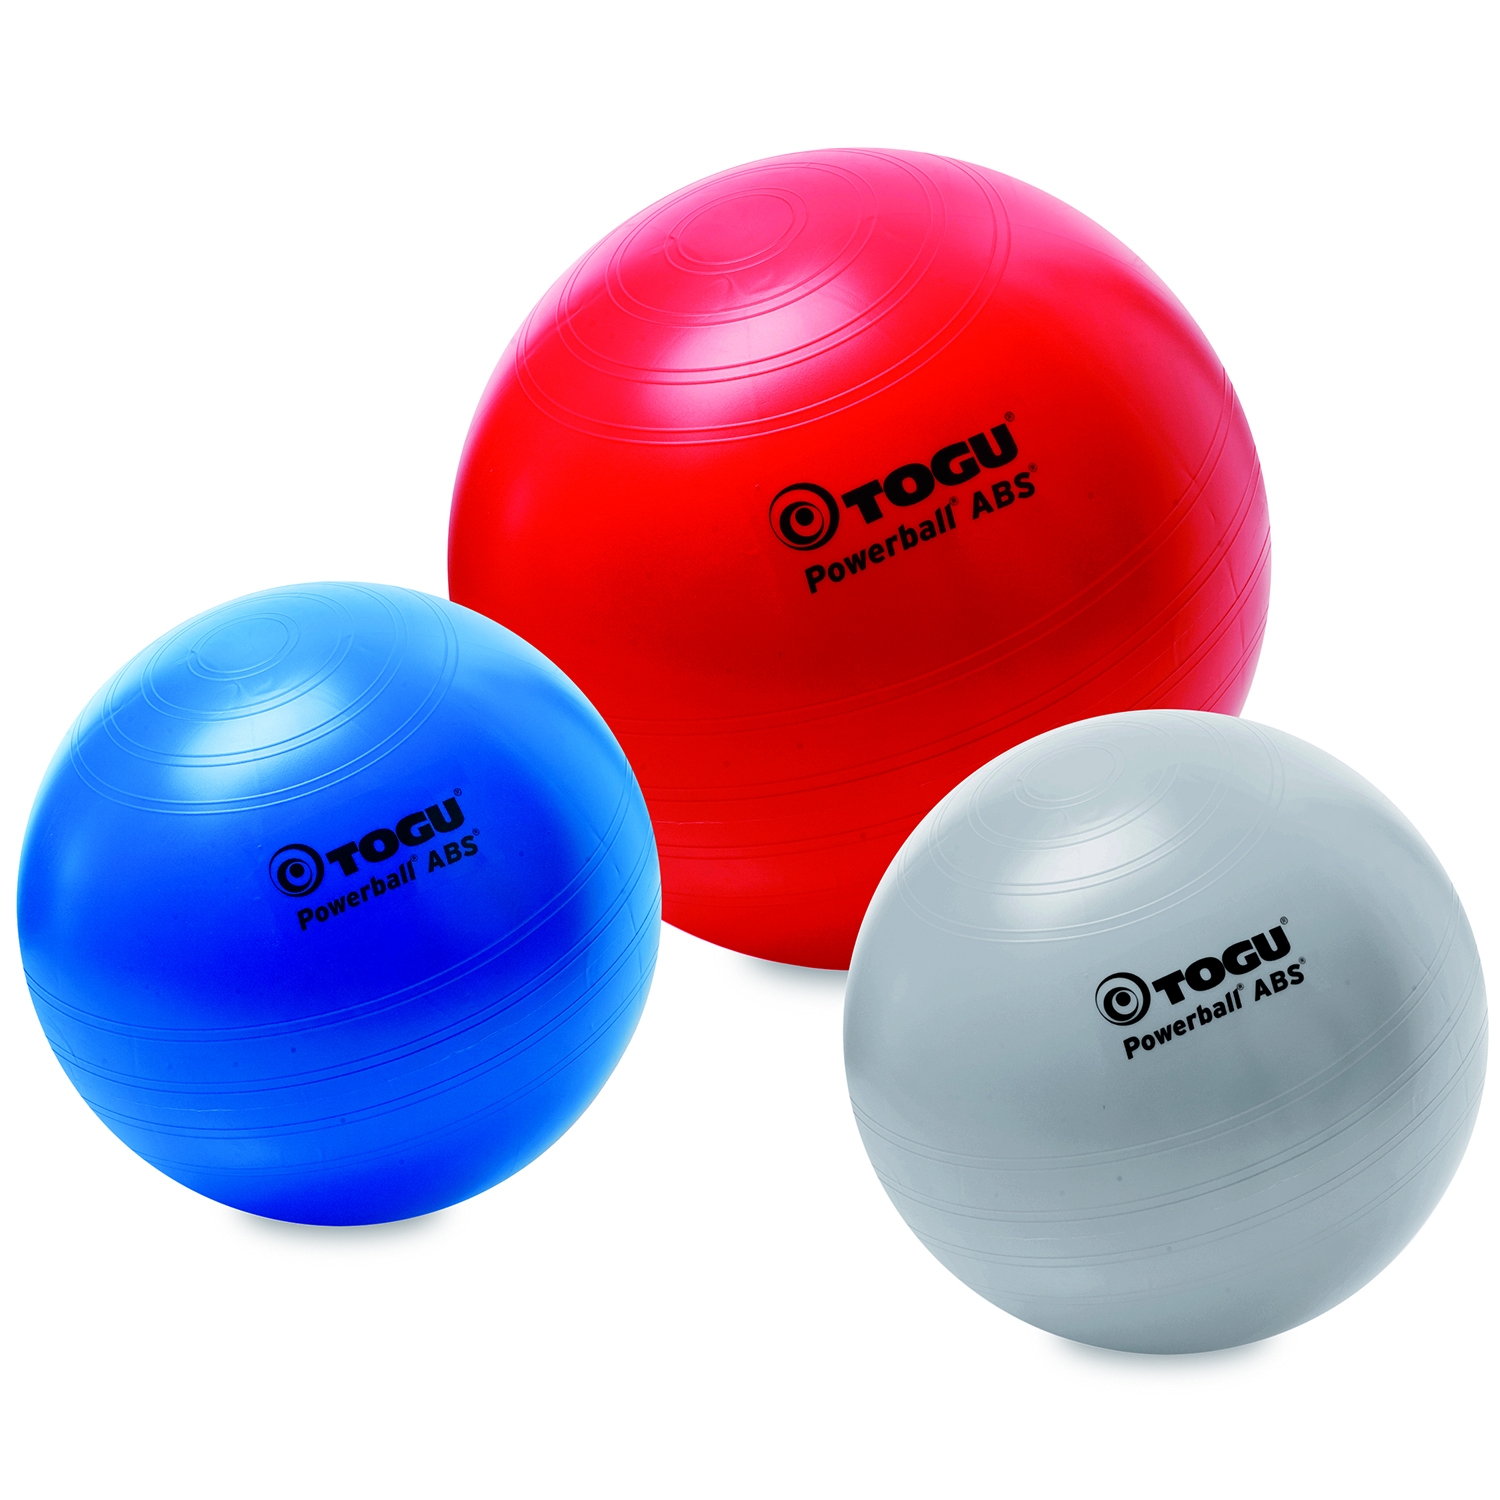 Togu Powerball ABS - ballon siège - 55 cm - argent